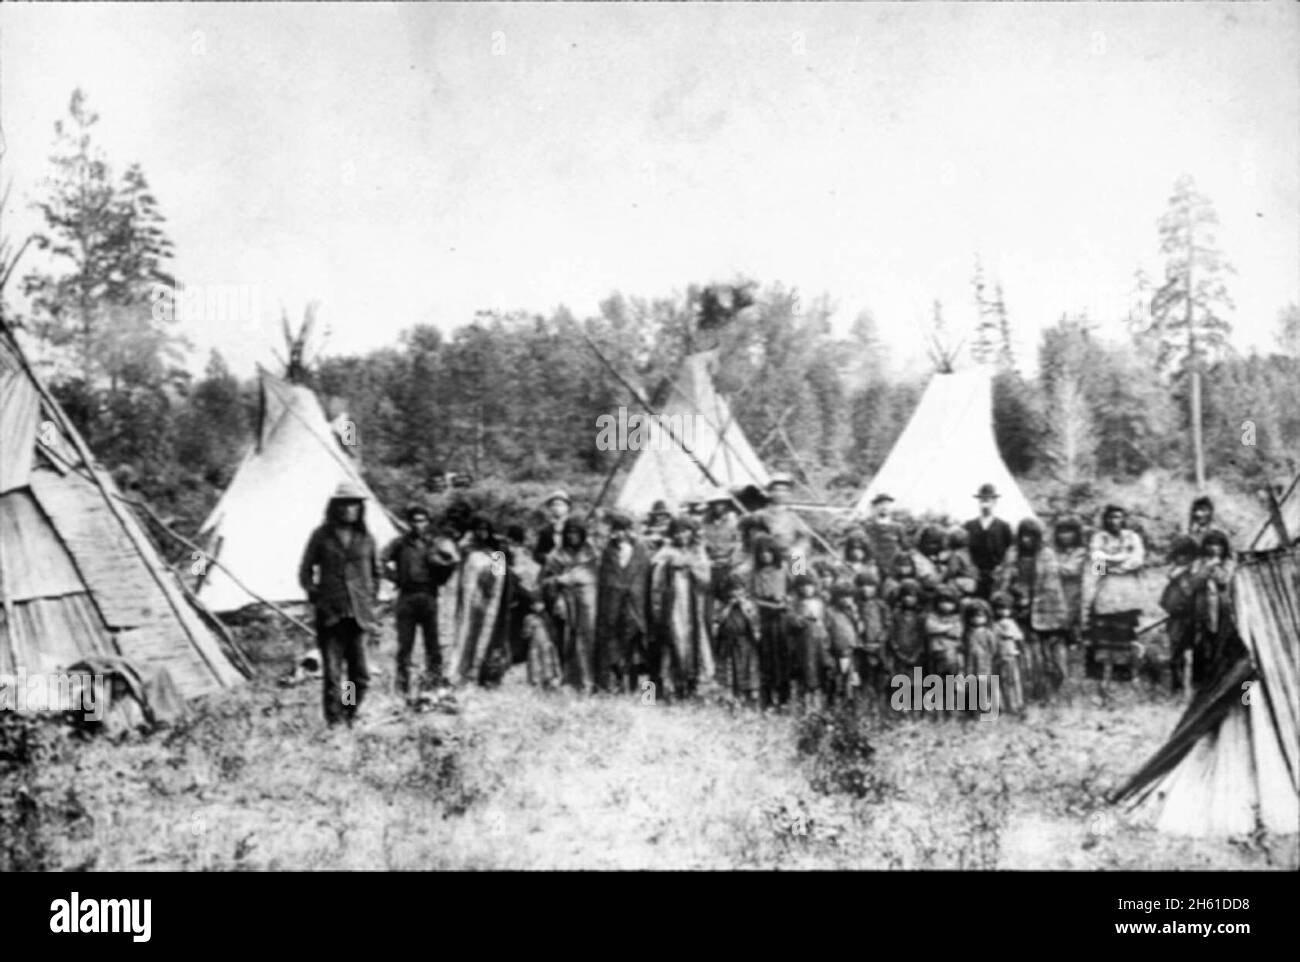 Kootenai group with tepees, circa 1900 Stock Photo